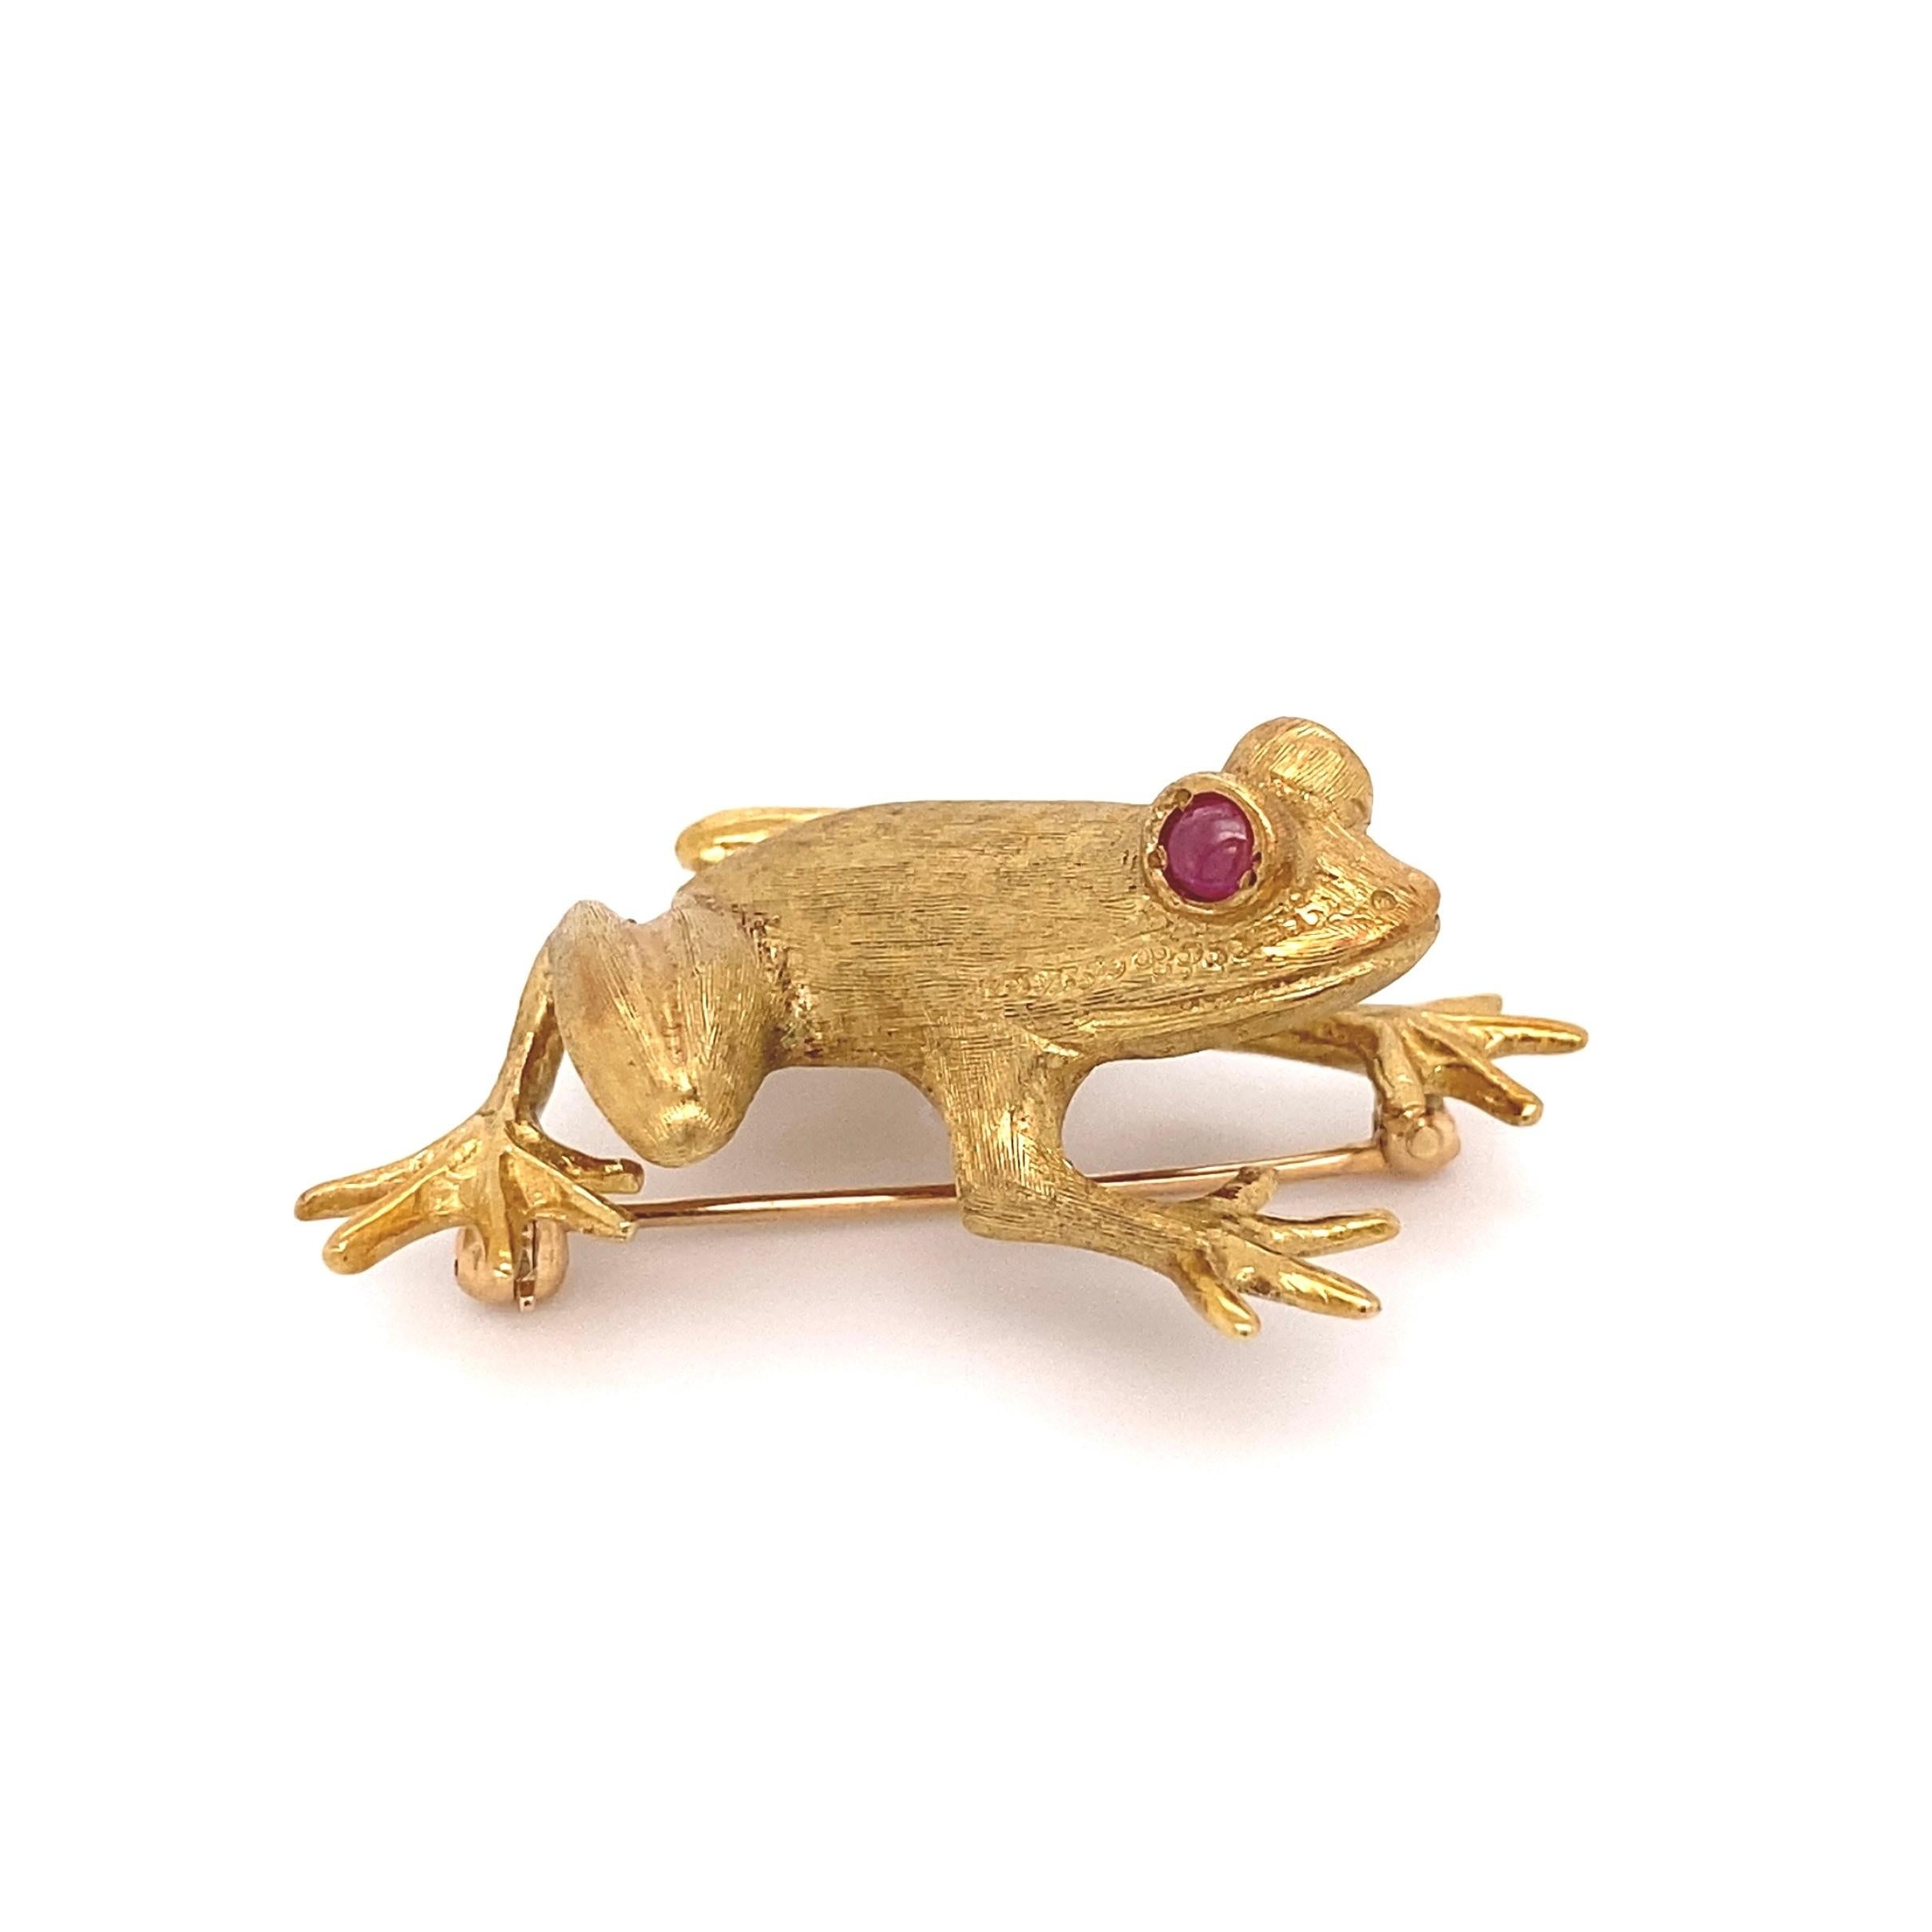 Designer J Cooper Gold Frog Brooch Pin Fine Estate Jewelry Excellent état - En vente à Montreal, QC